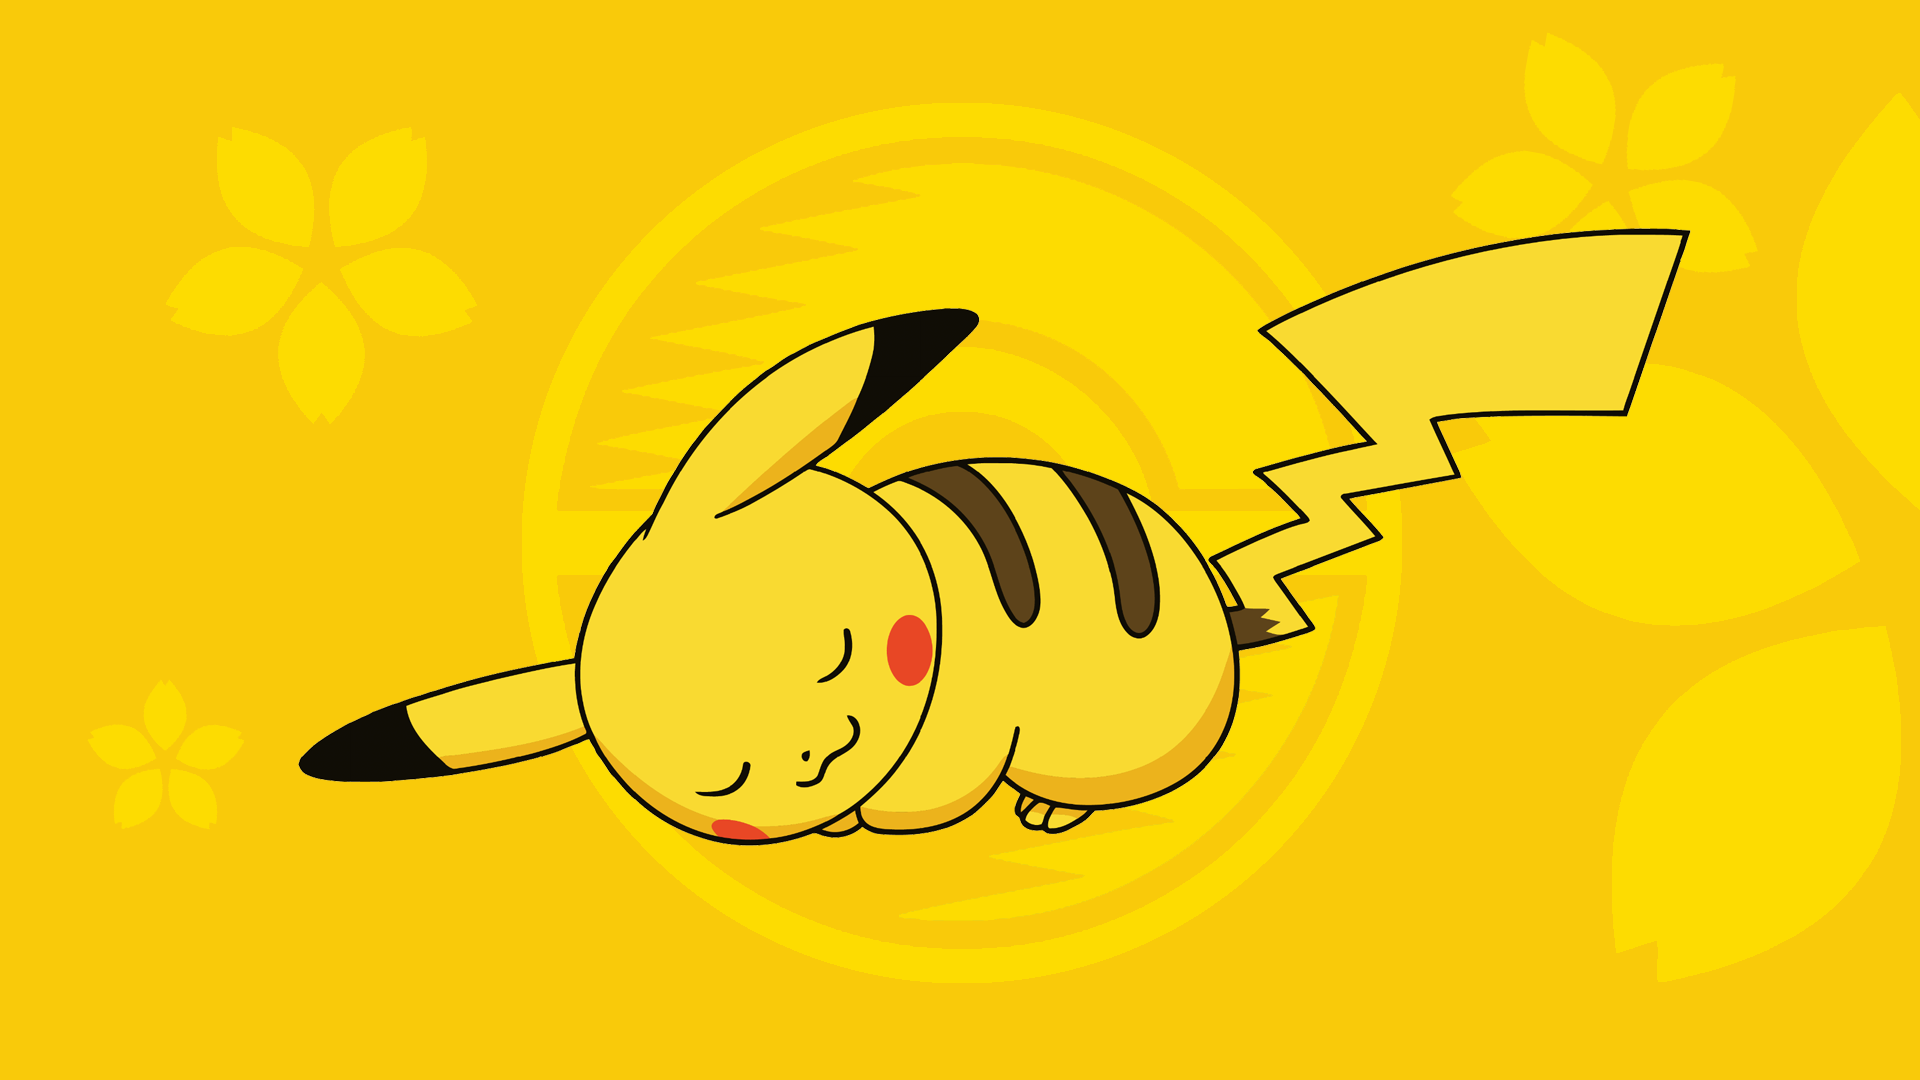 Cute Pikachu Wallpaper HD